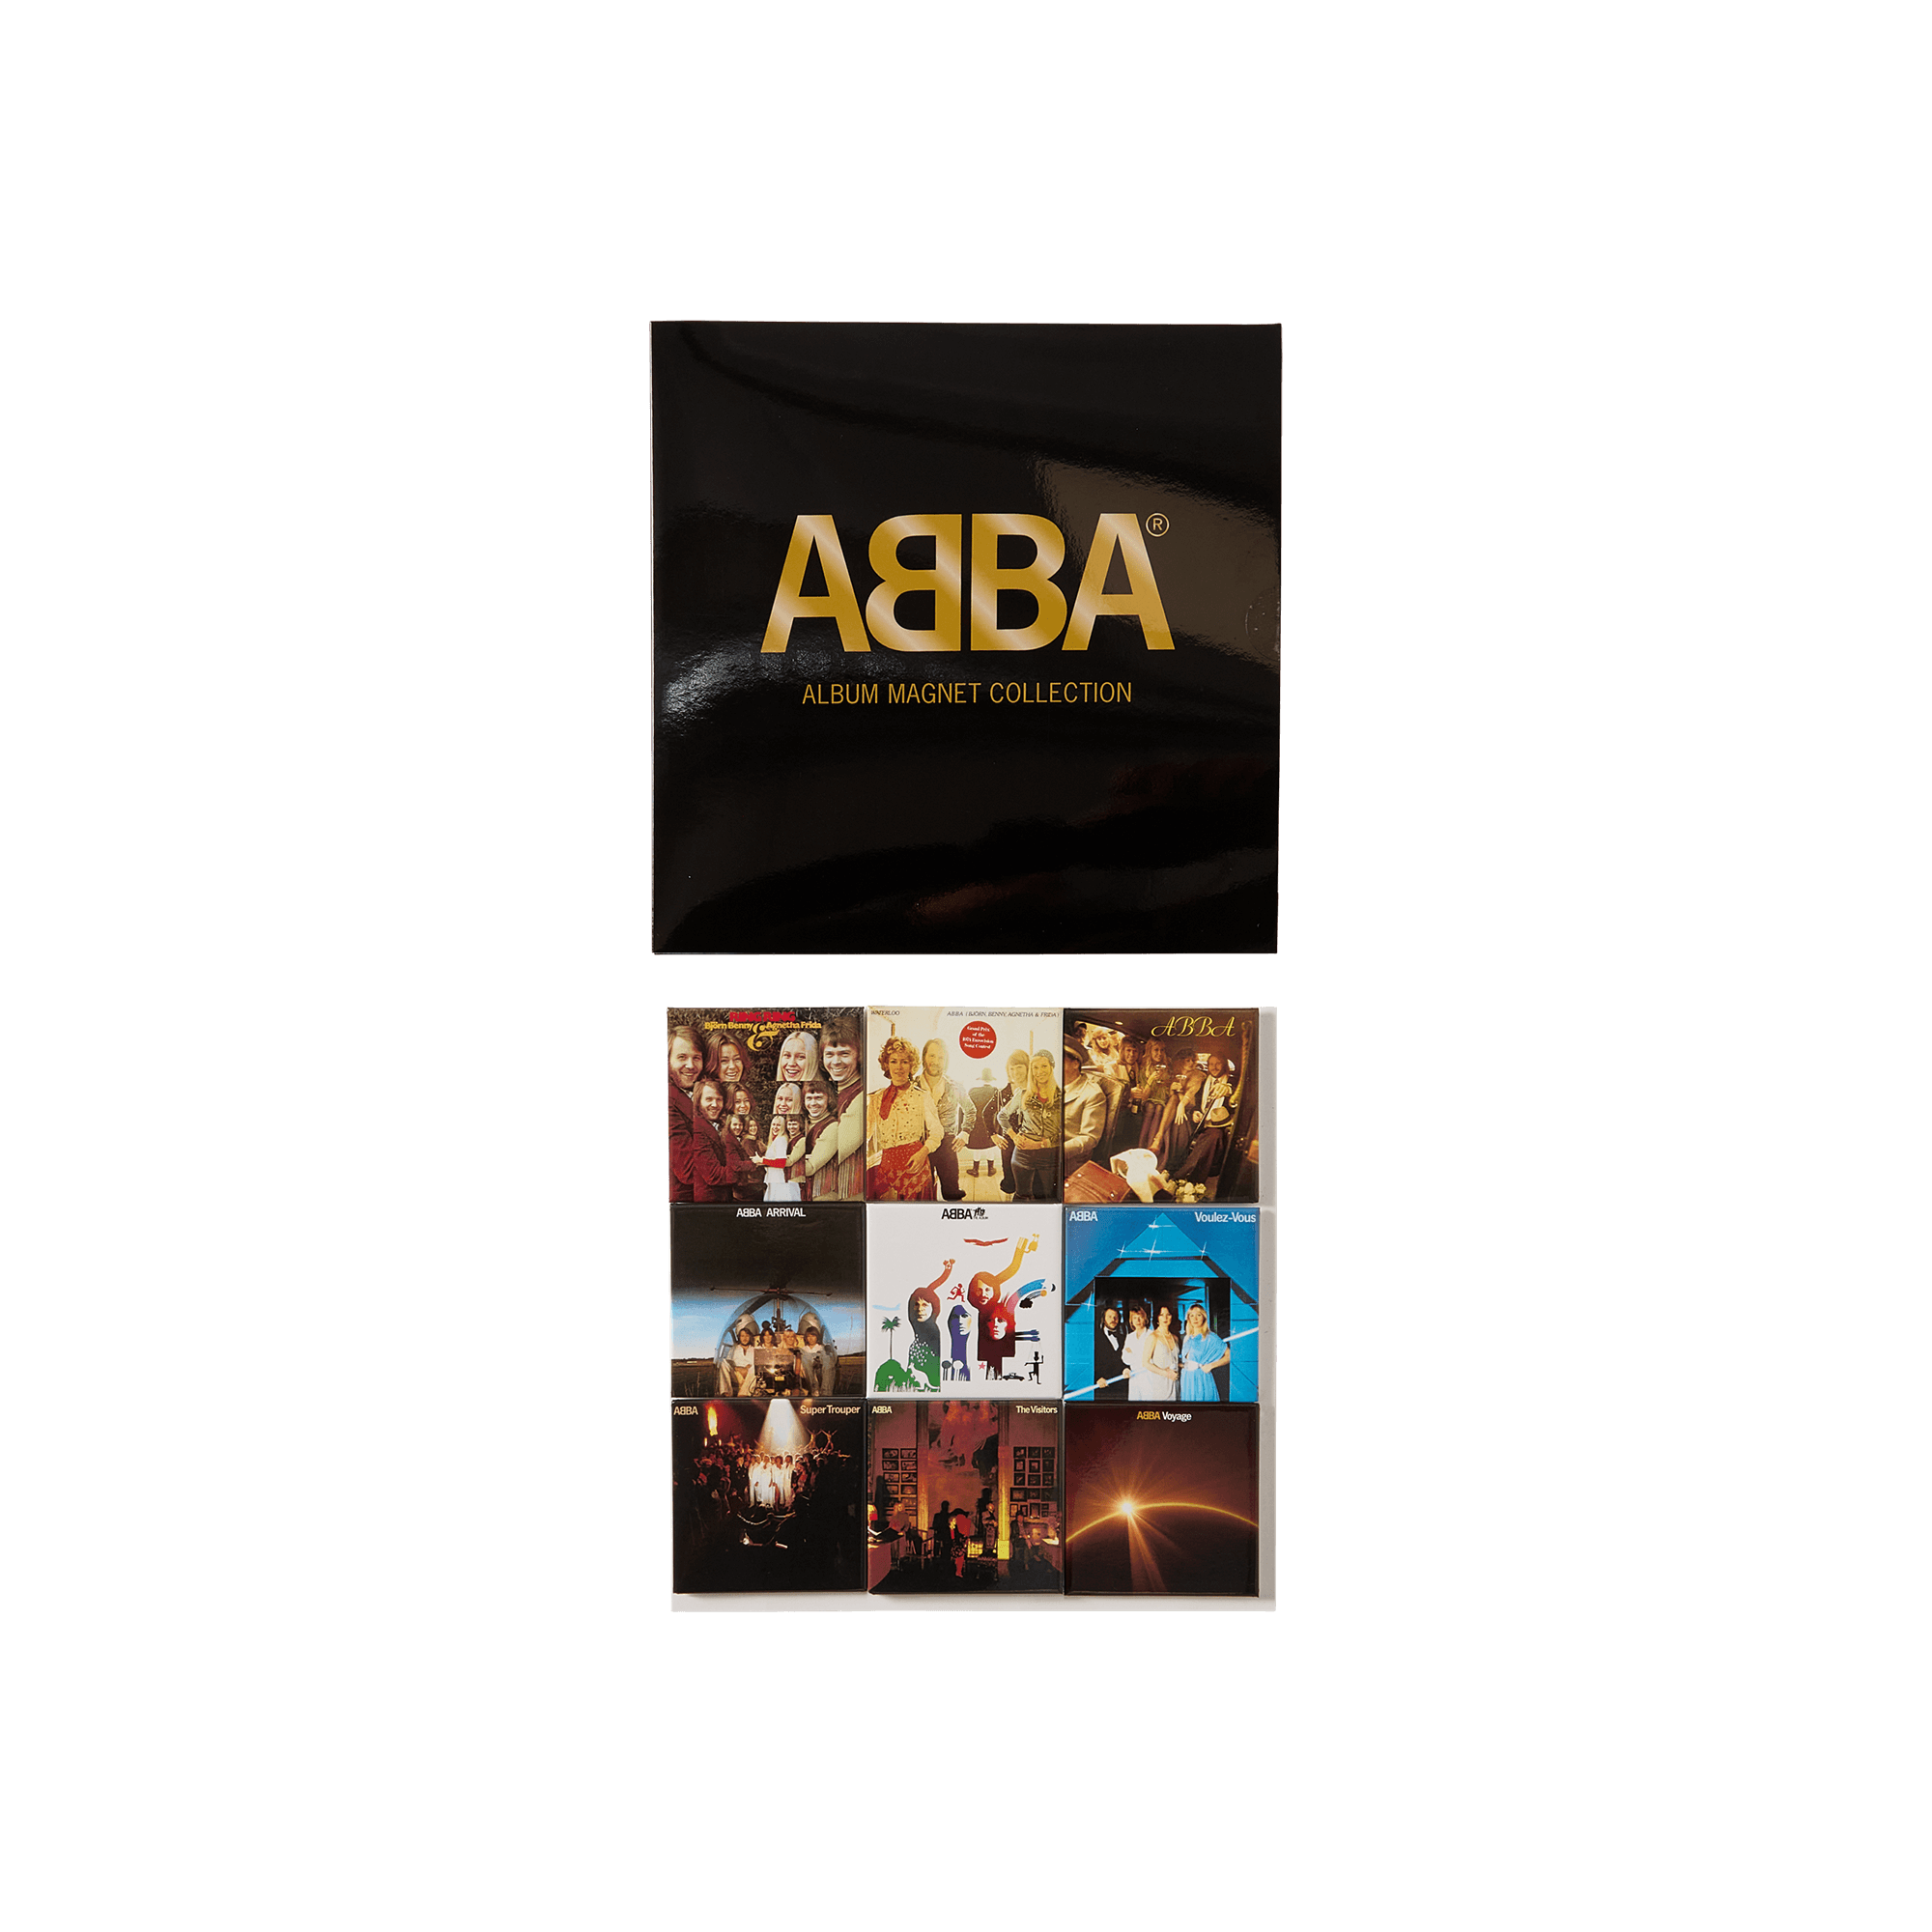 ABBA album magnet collection